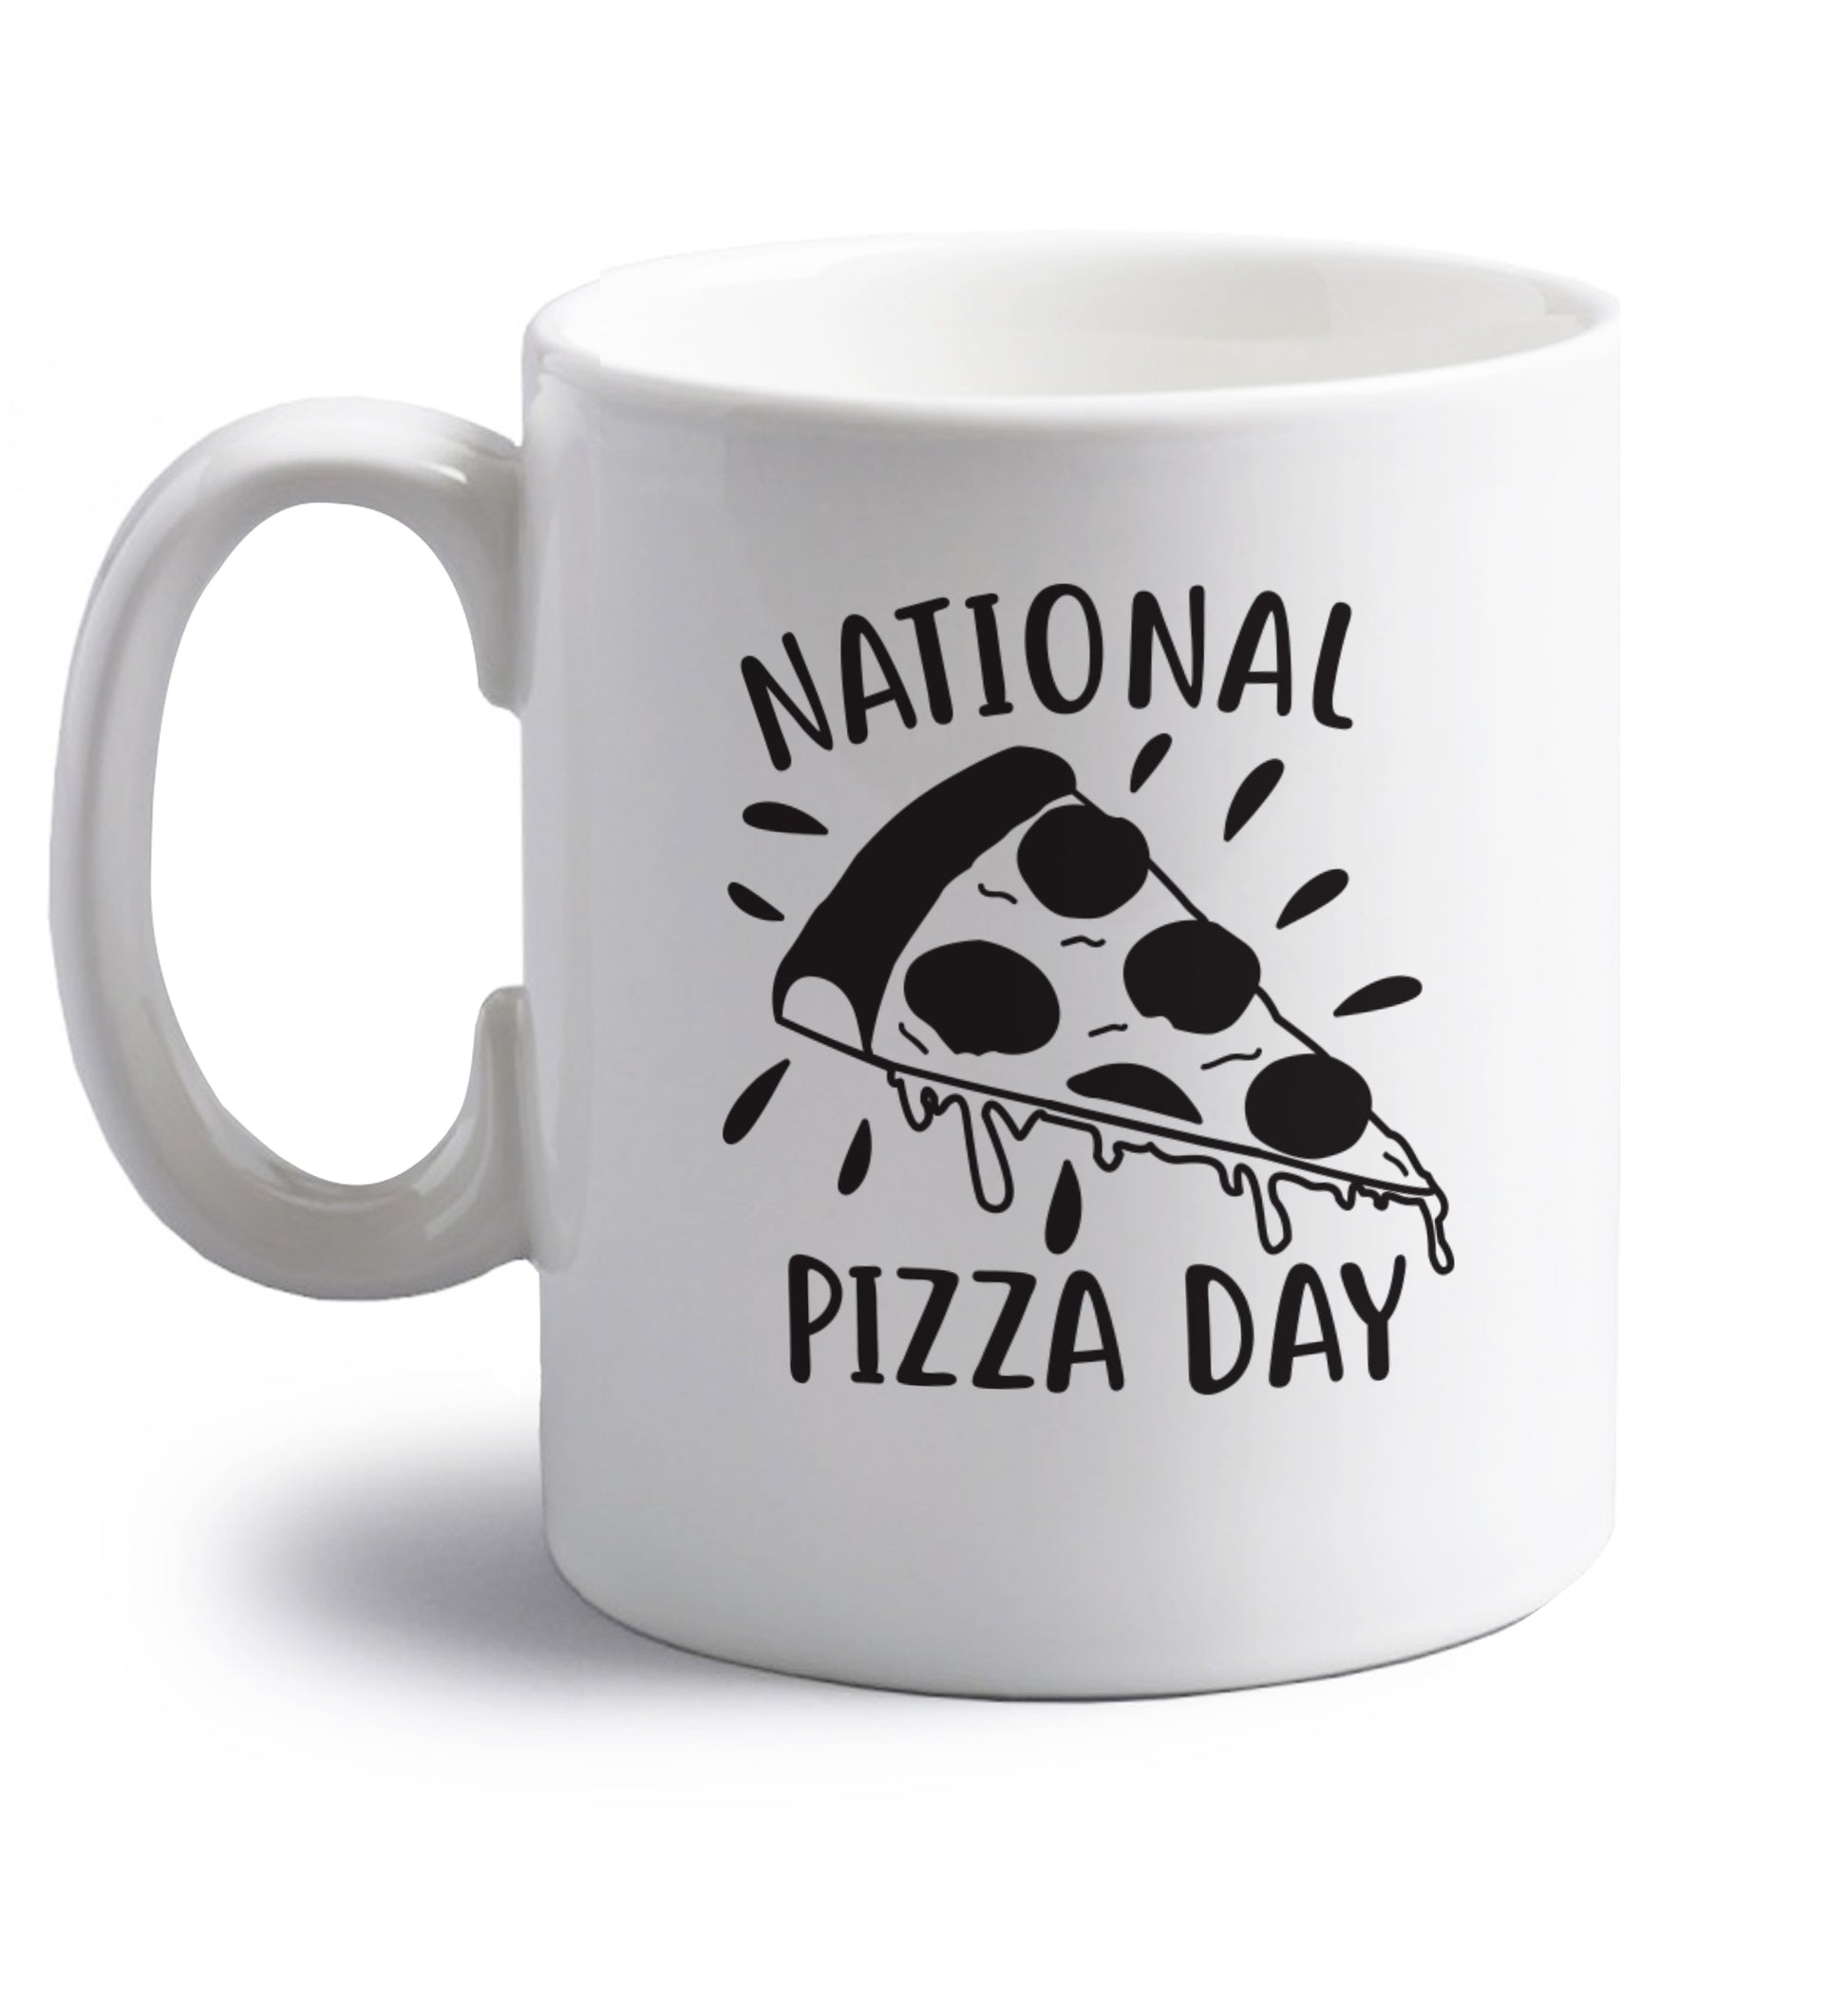 National pizza day right handed white ceramic mug 